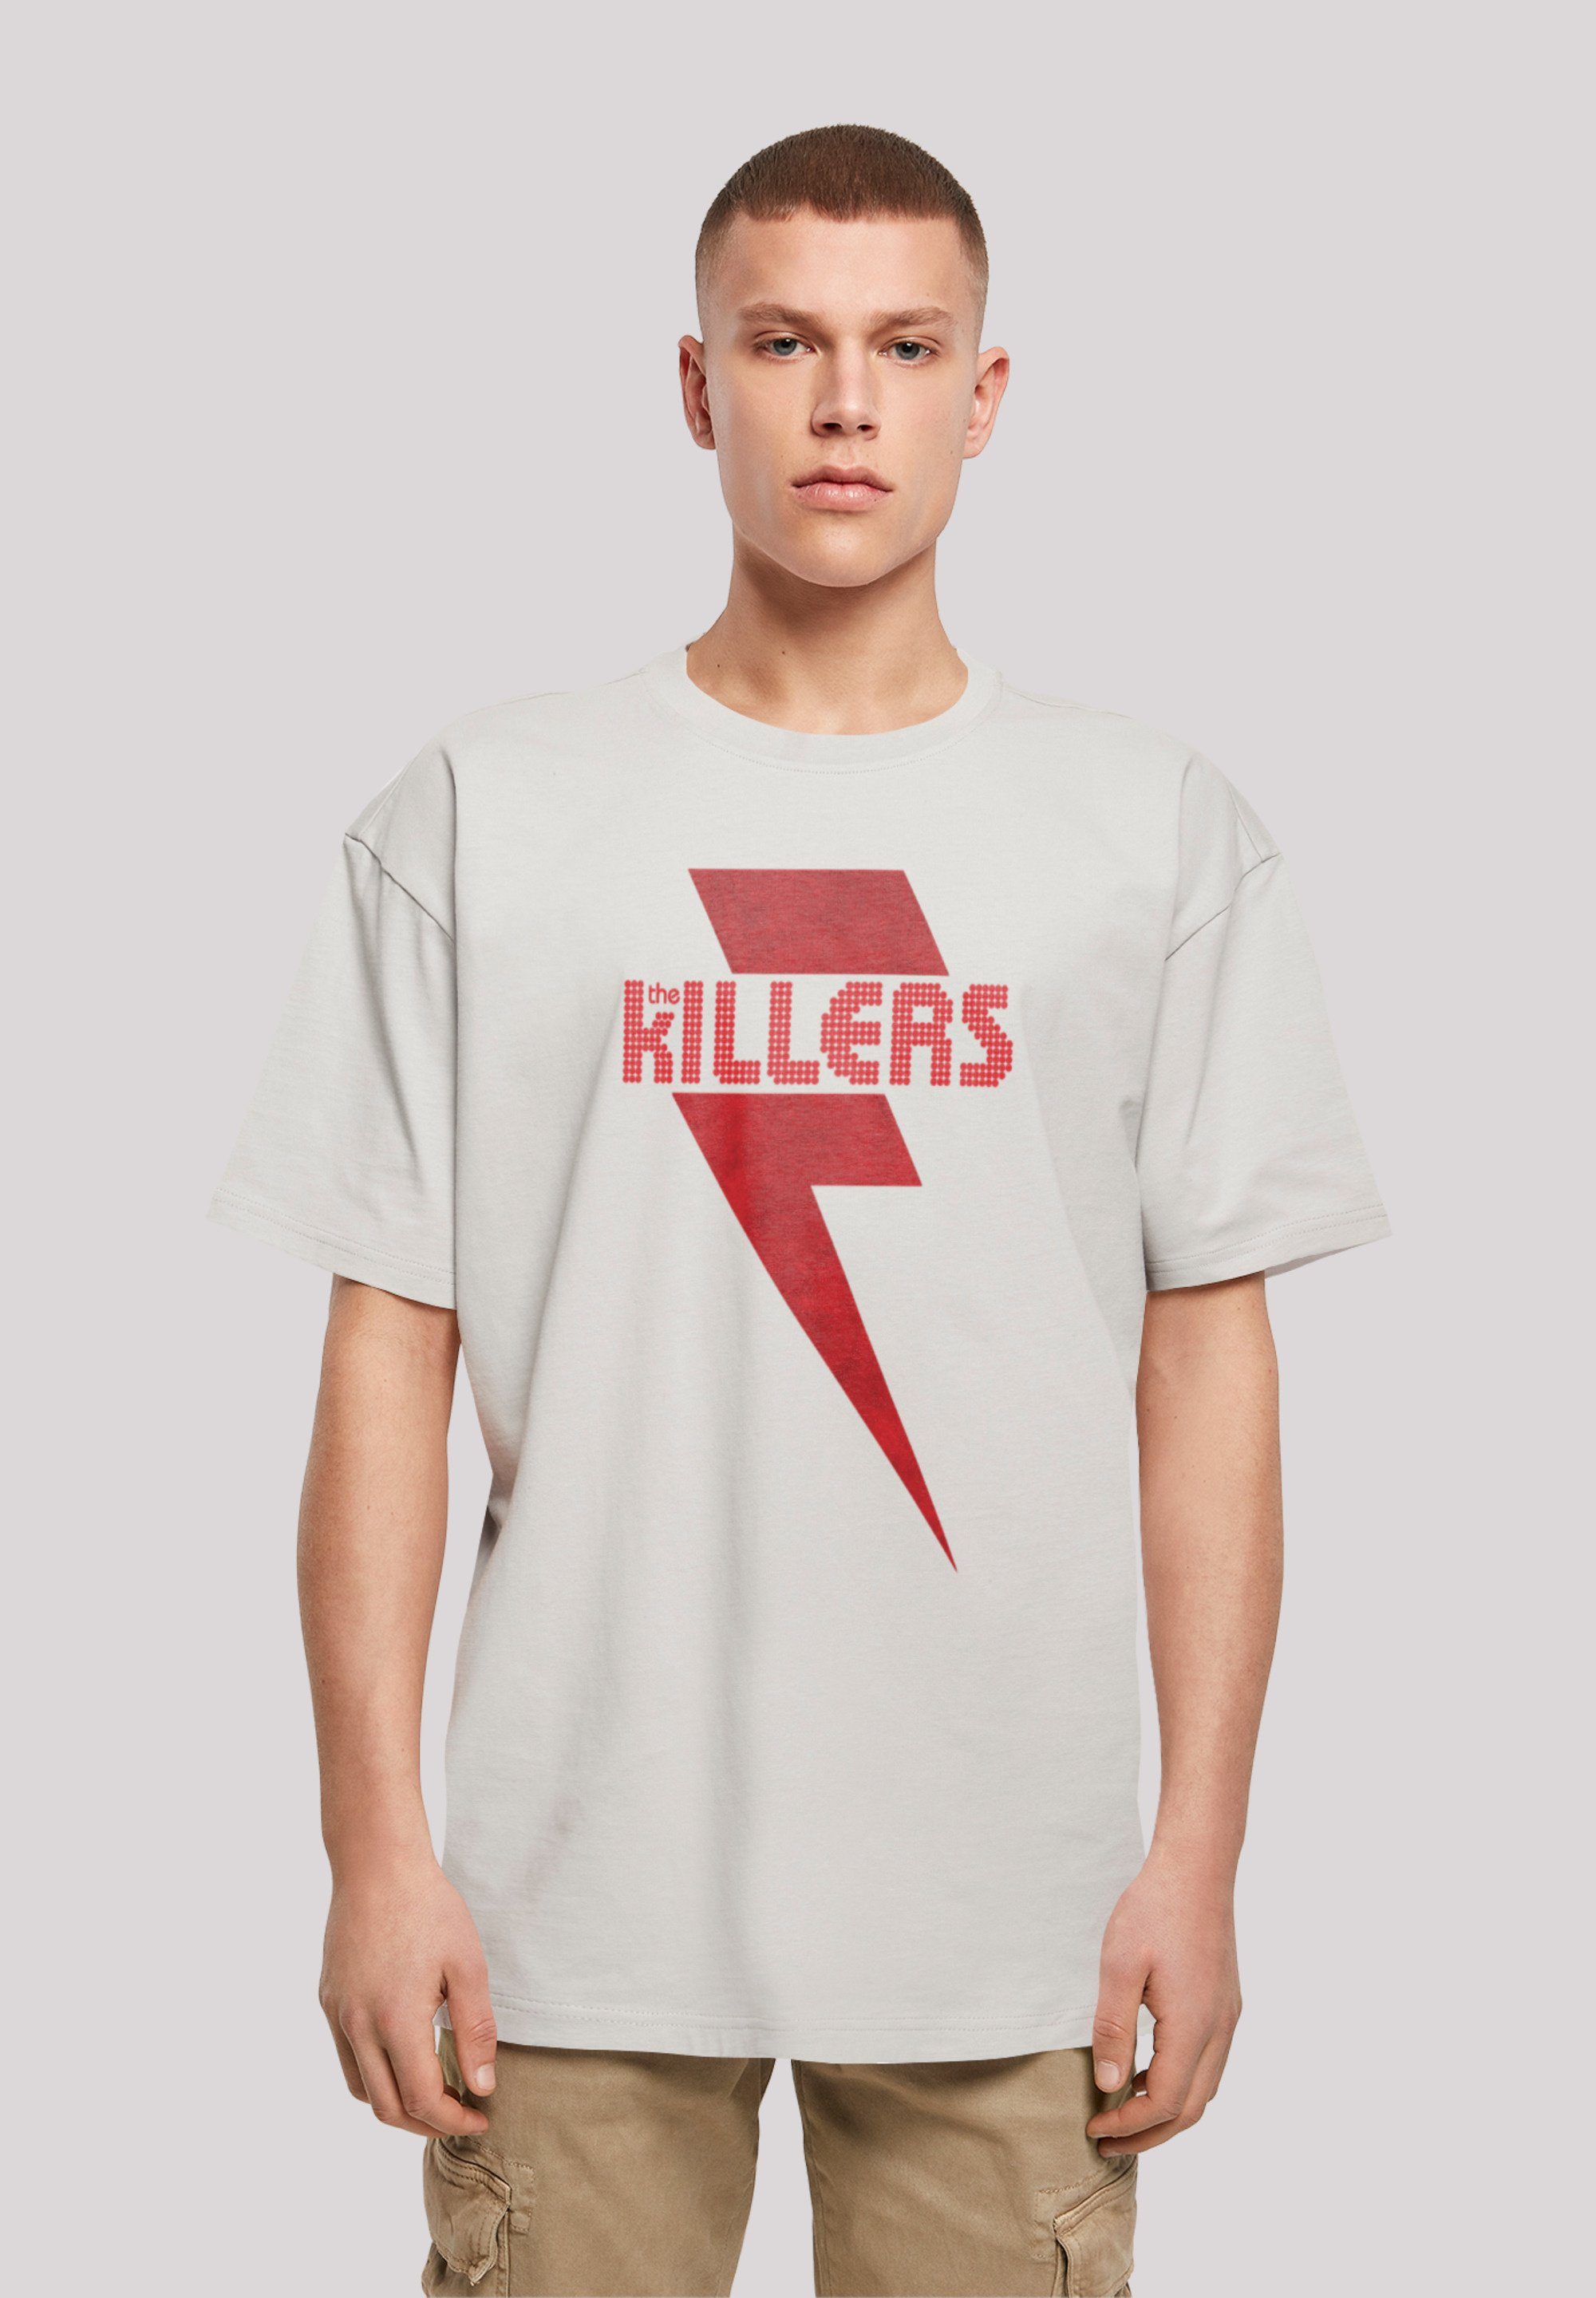 Band F4NT4STIC lightasphalt T-Shirt Print Rock Red Bolt The Killers